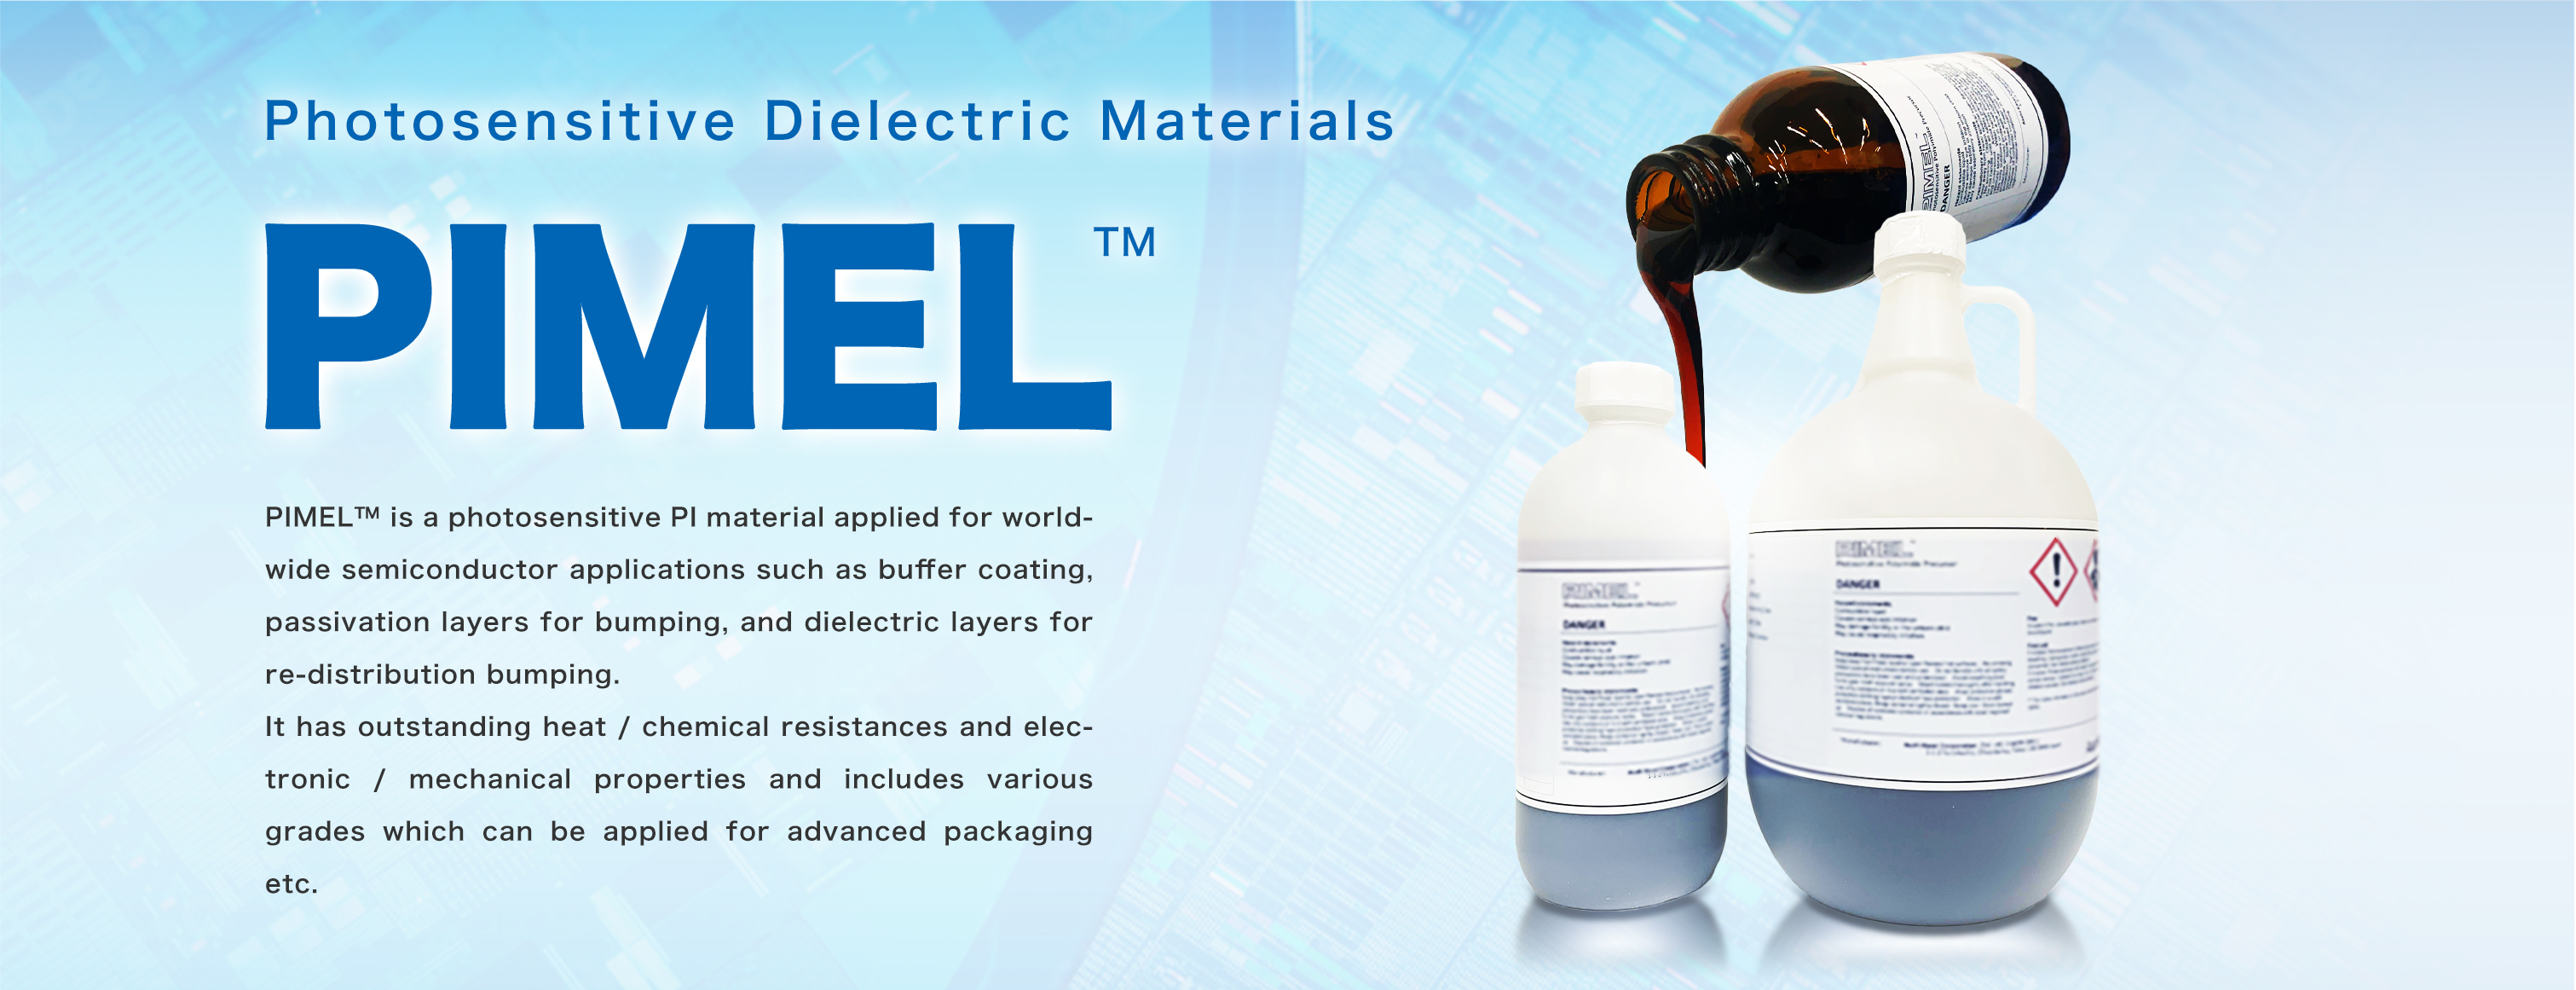 Photosensitive Dielectric Materials PIMEL™